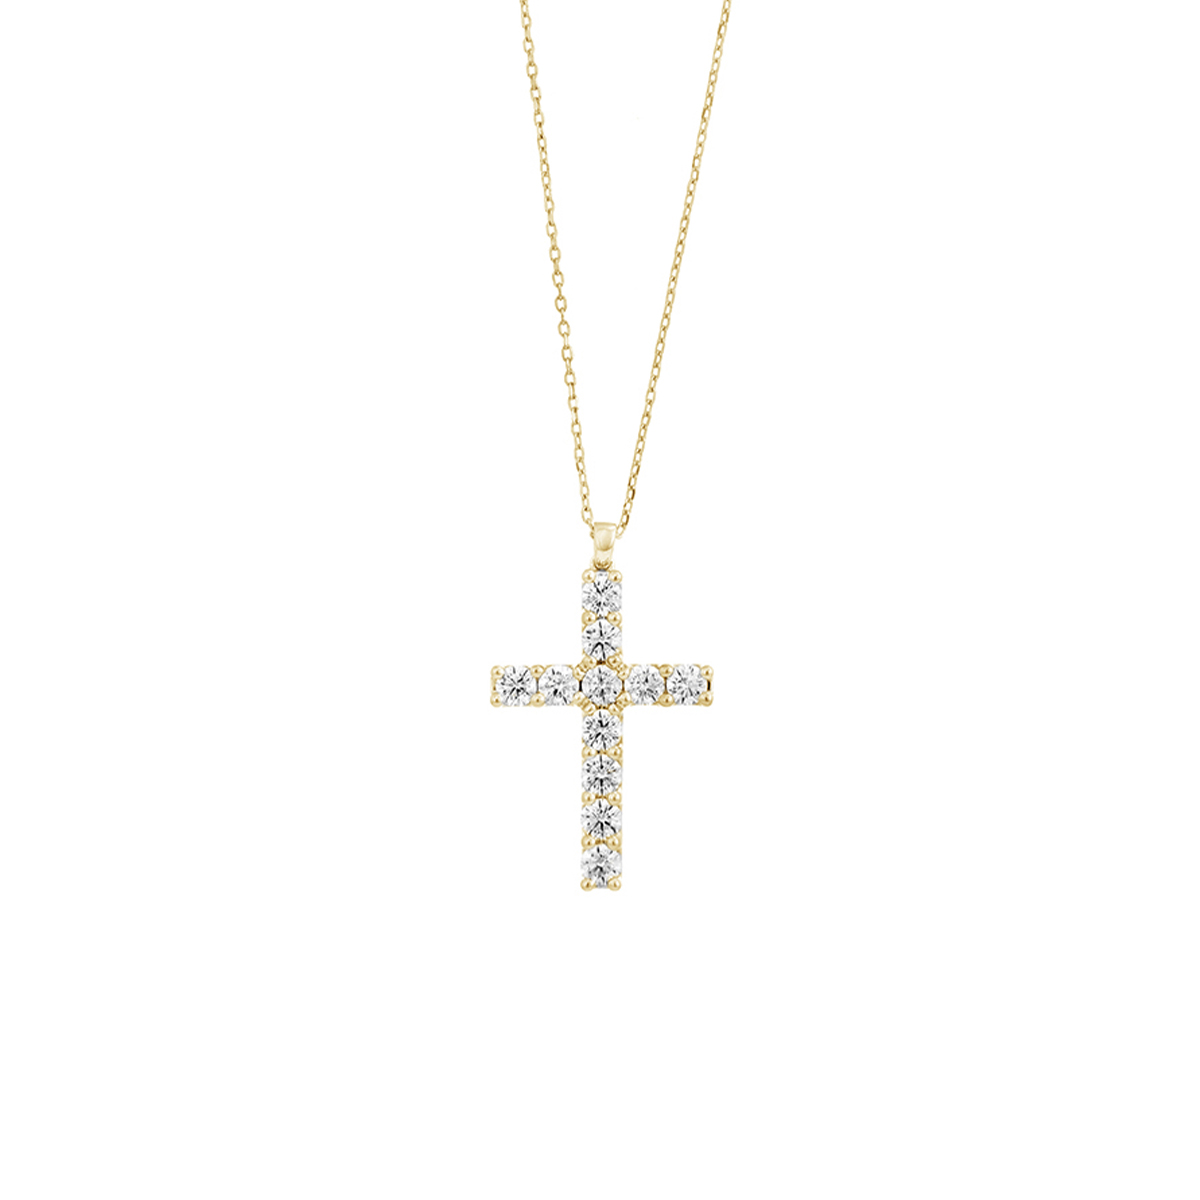 14K Yellow Gold 0.70 Carat Diamond Cross Pendant with Chain